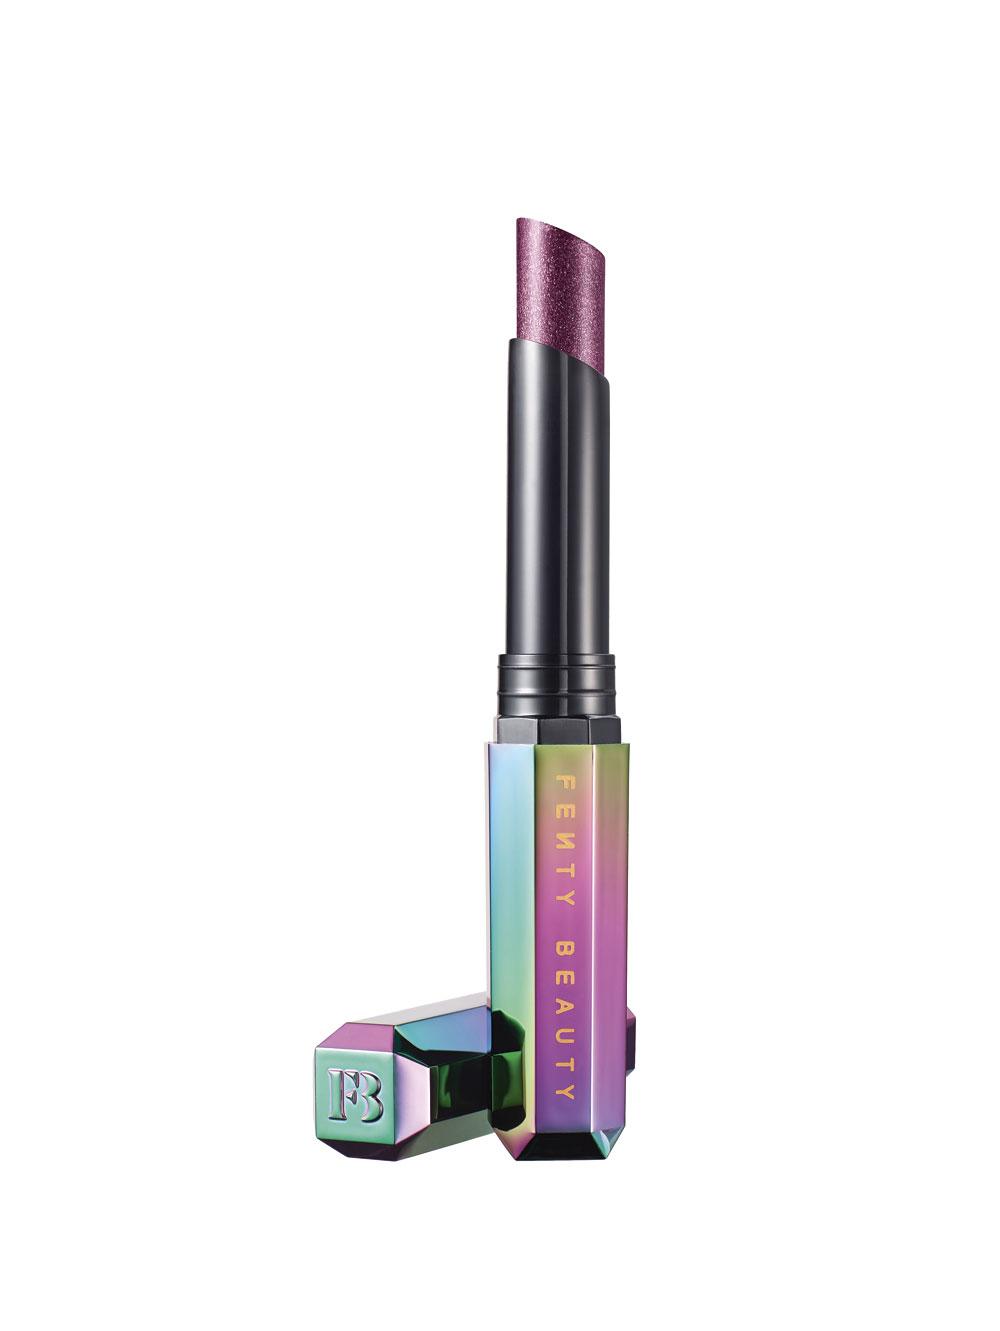 Starlit Hyper-Glitz Lipstick (18,69 euro), Fenty Beauty, via harveynichols.com